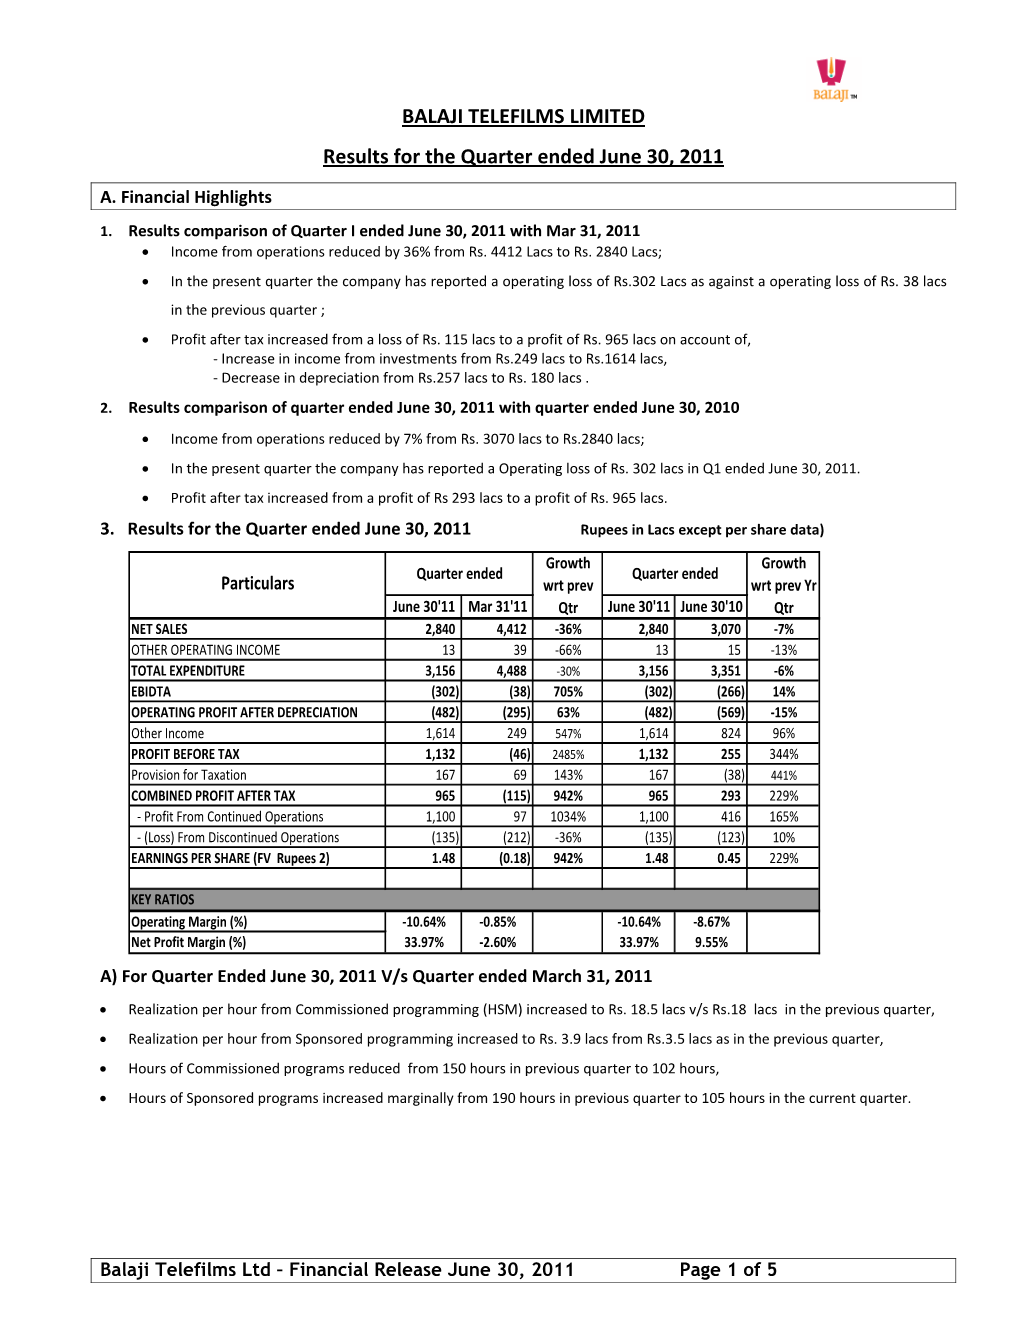 BALAJI TELEFILMS LIMITED Results for the Quarter Ended June 30, 2011